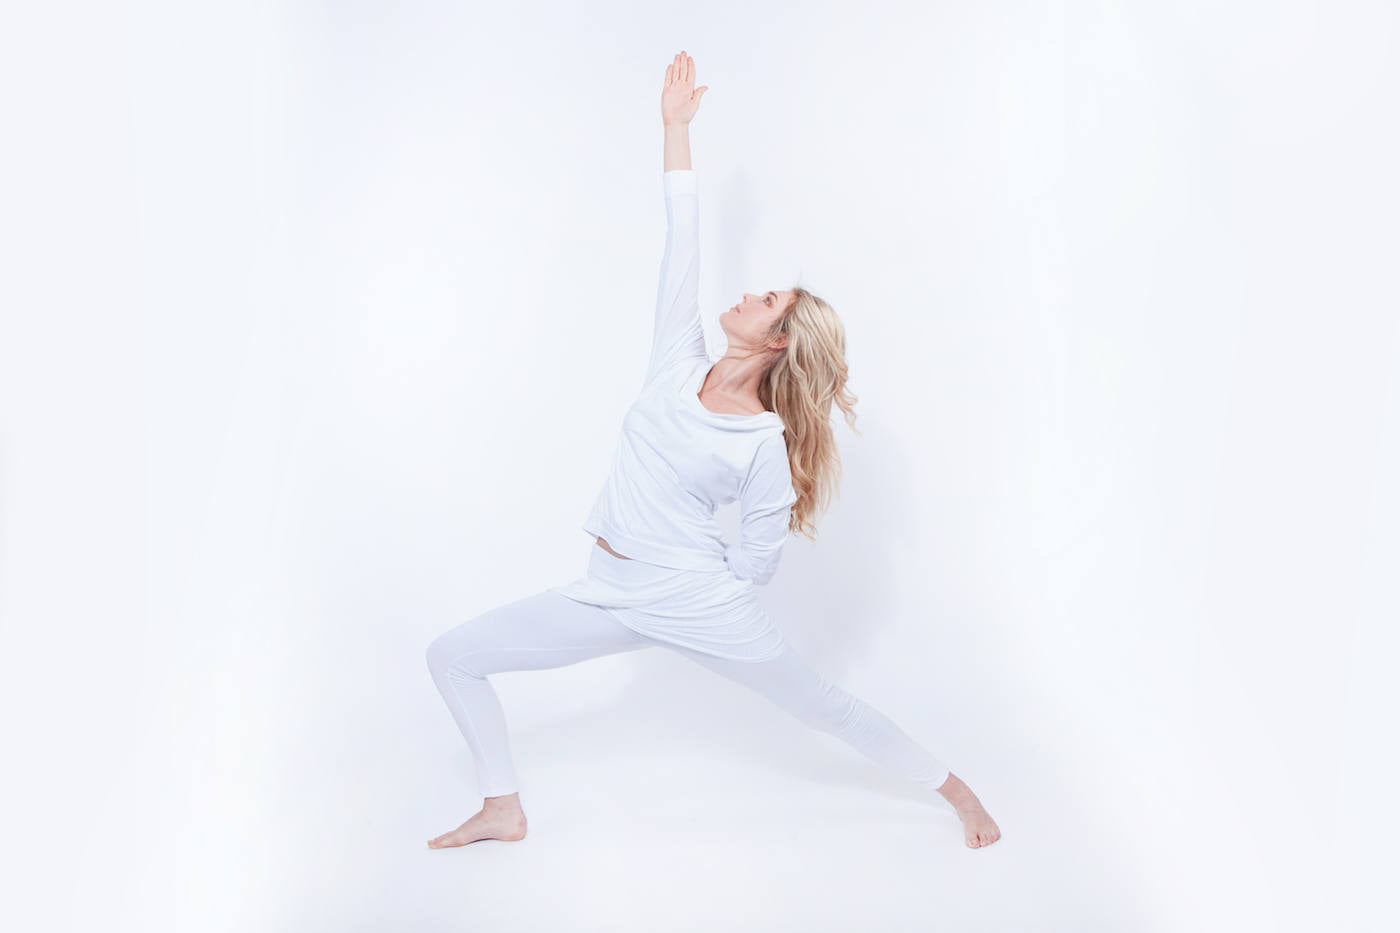 Women's White Cotton Kundalini Yoga Leggings